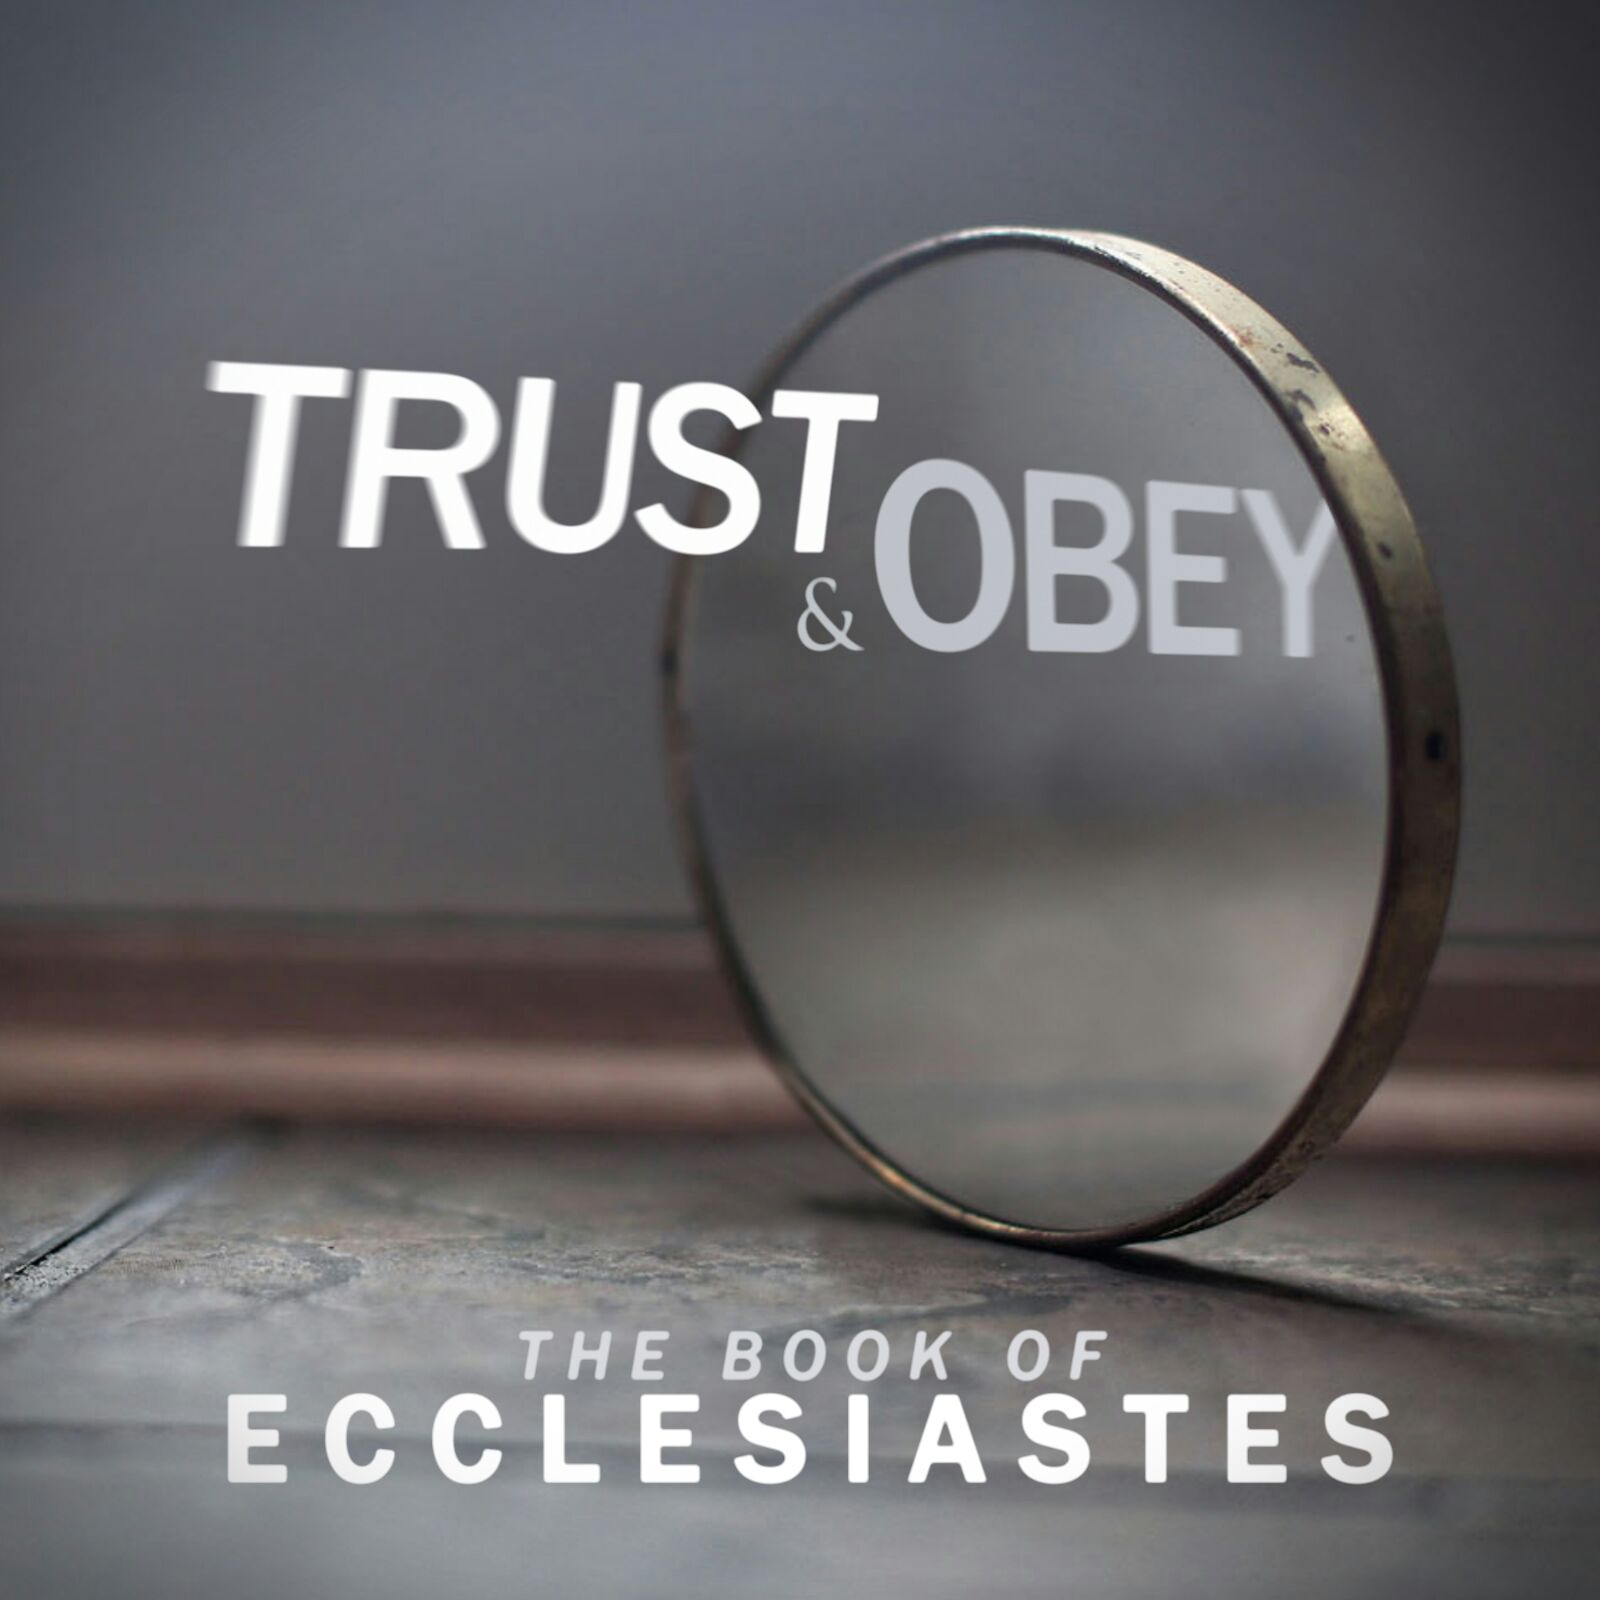 Ecclesiastes 5:1-7 - Guarding our Steps